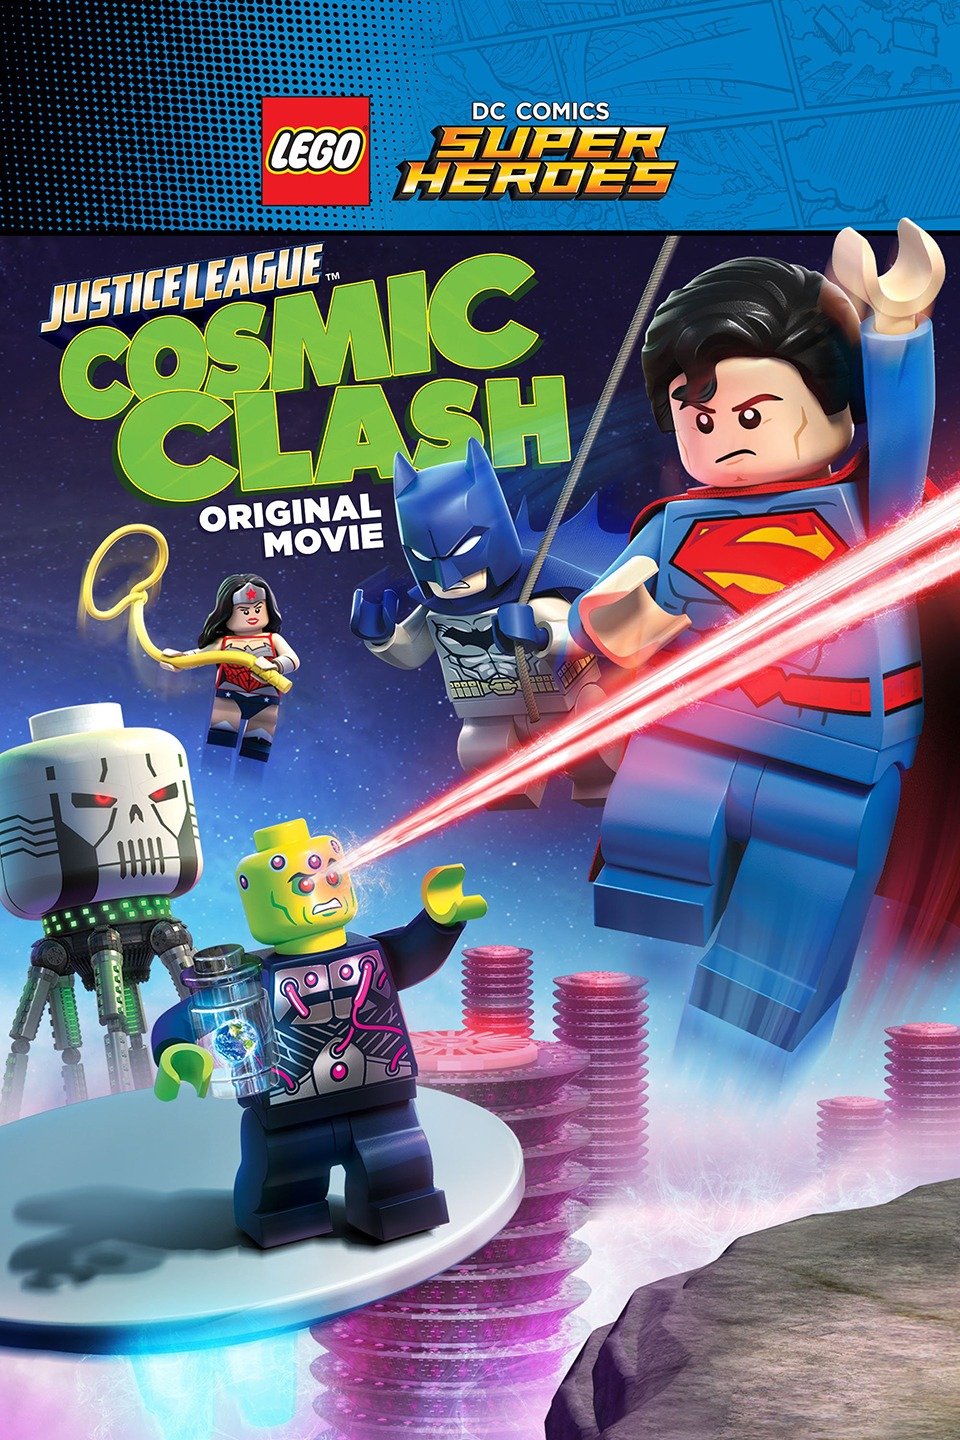 1-Lego DC Comics Cosmic Clash